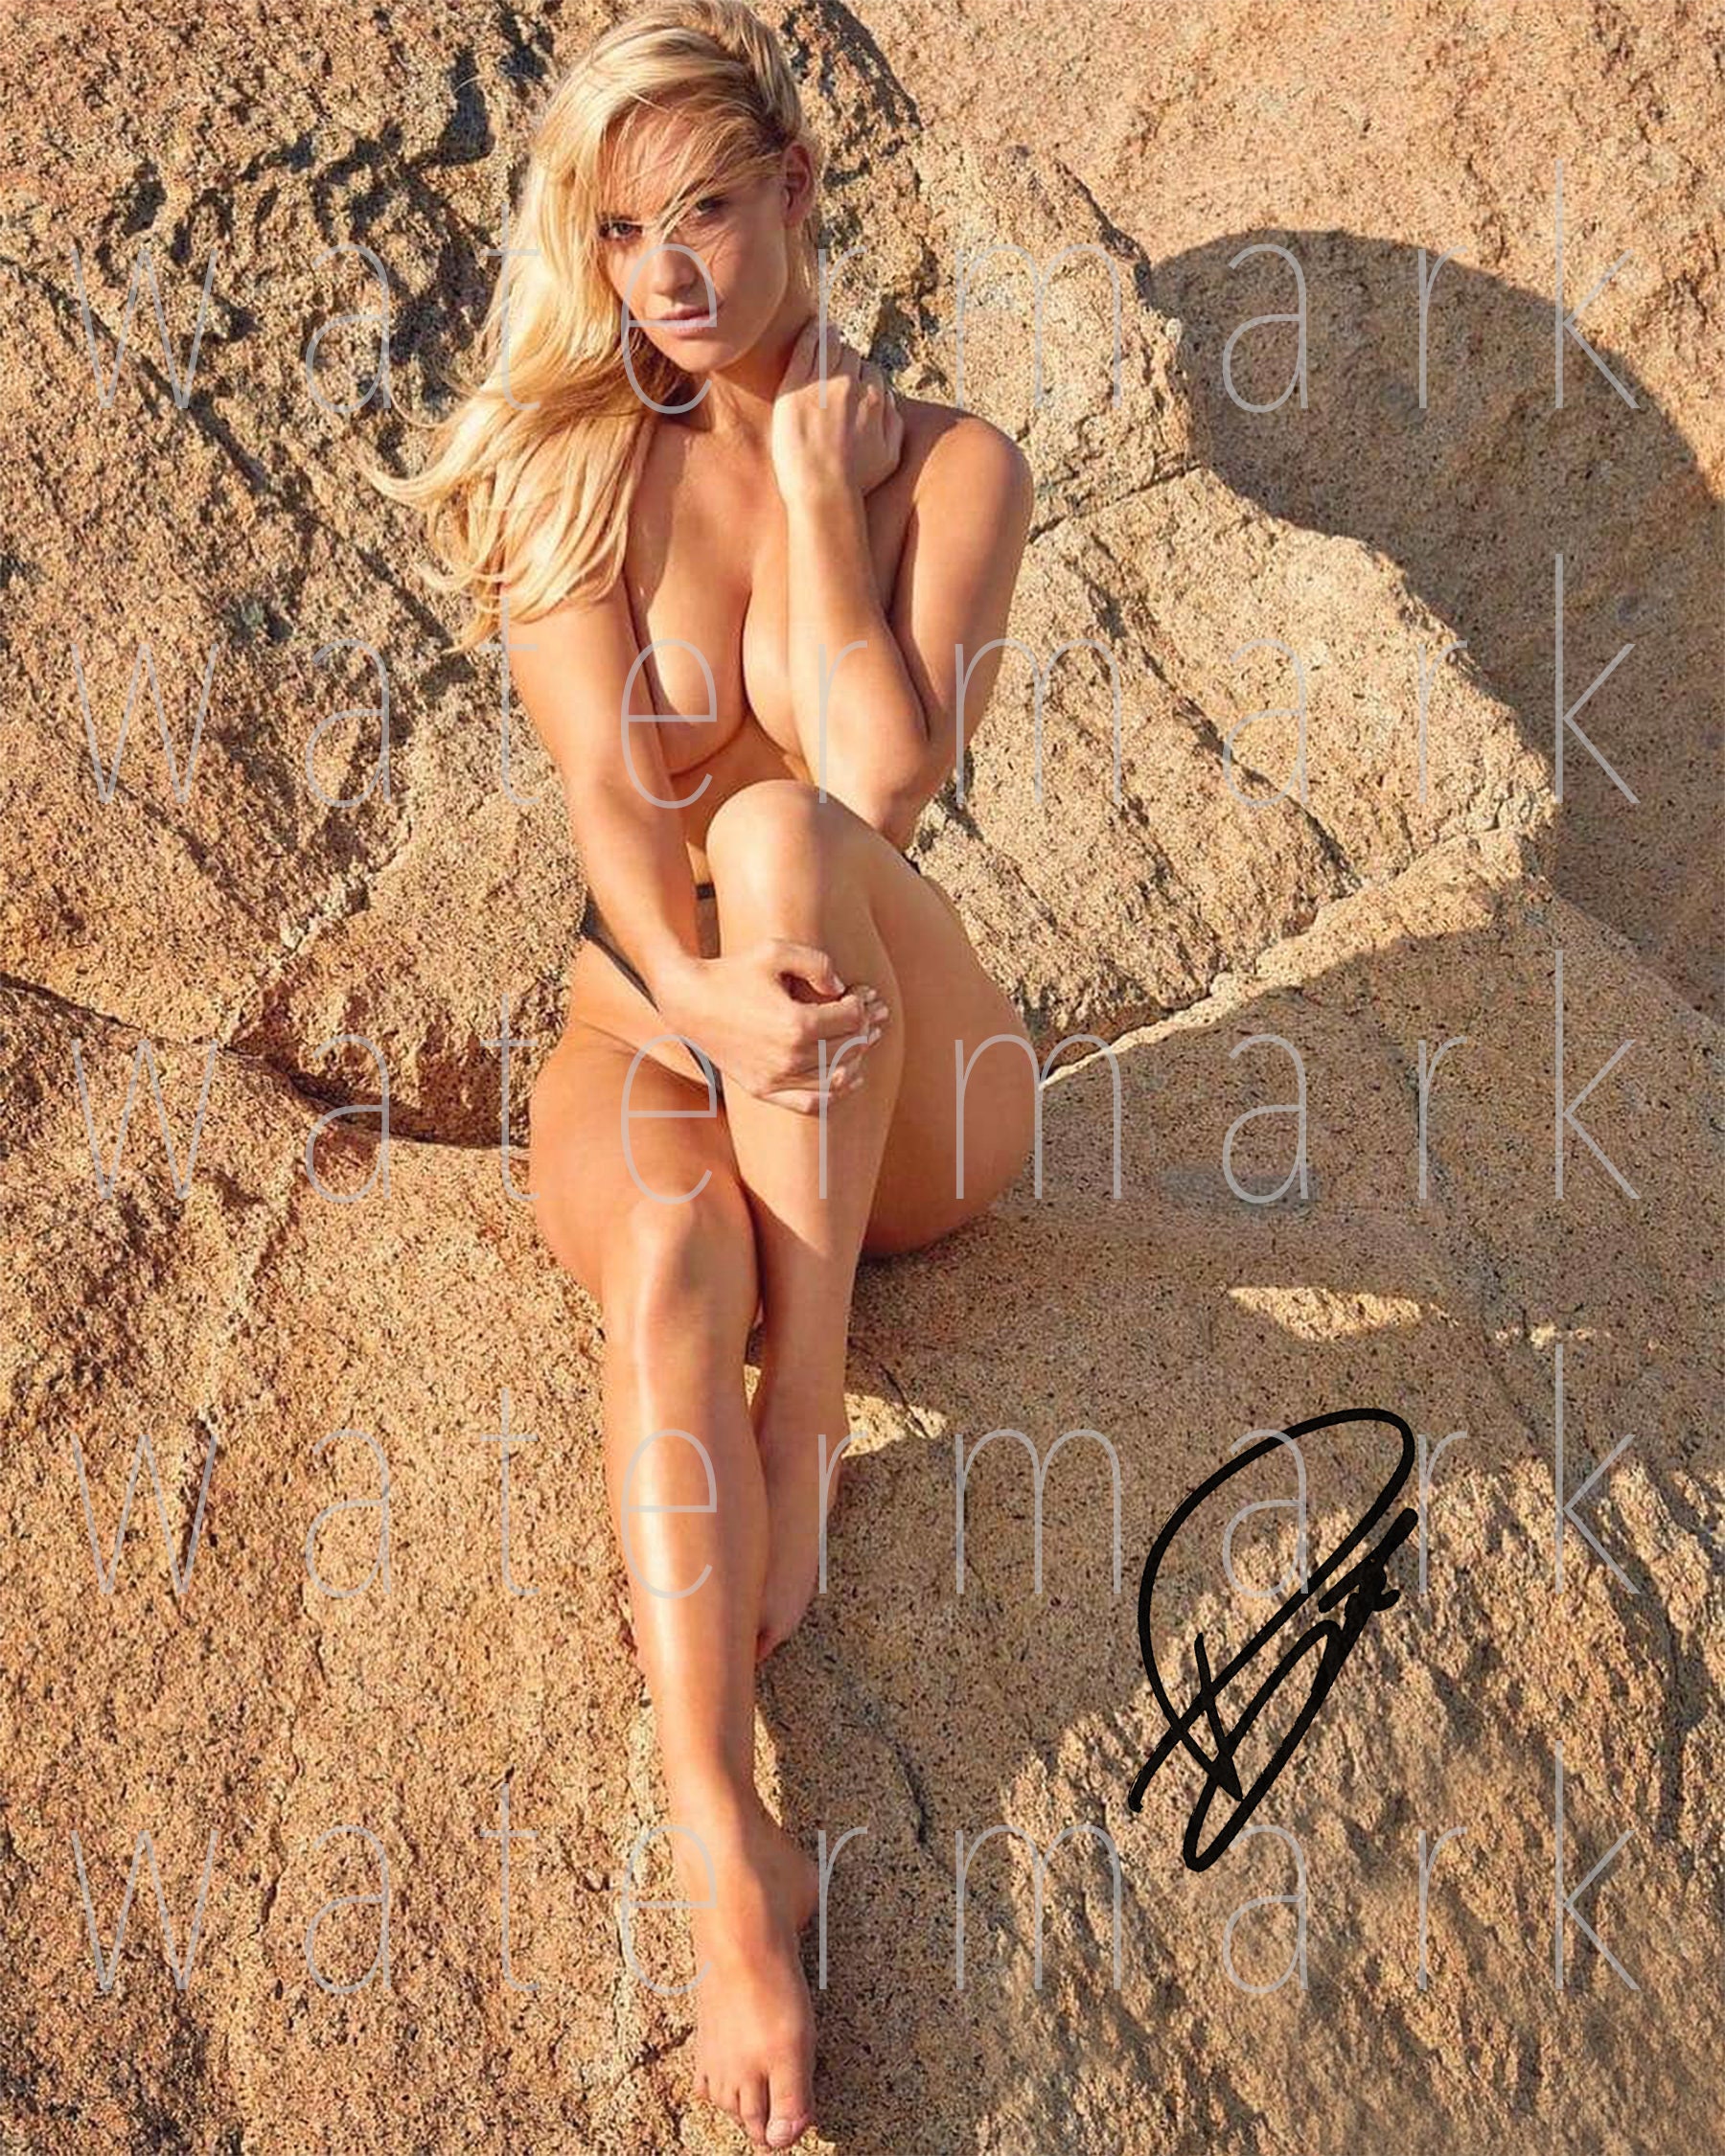 Paige Spiranac Golfer Sexy Hot Signed 8x10 Photo Autograph Photograph  Poster Print Reprint - Etsy